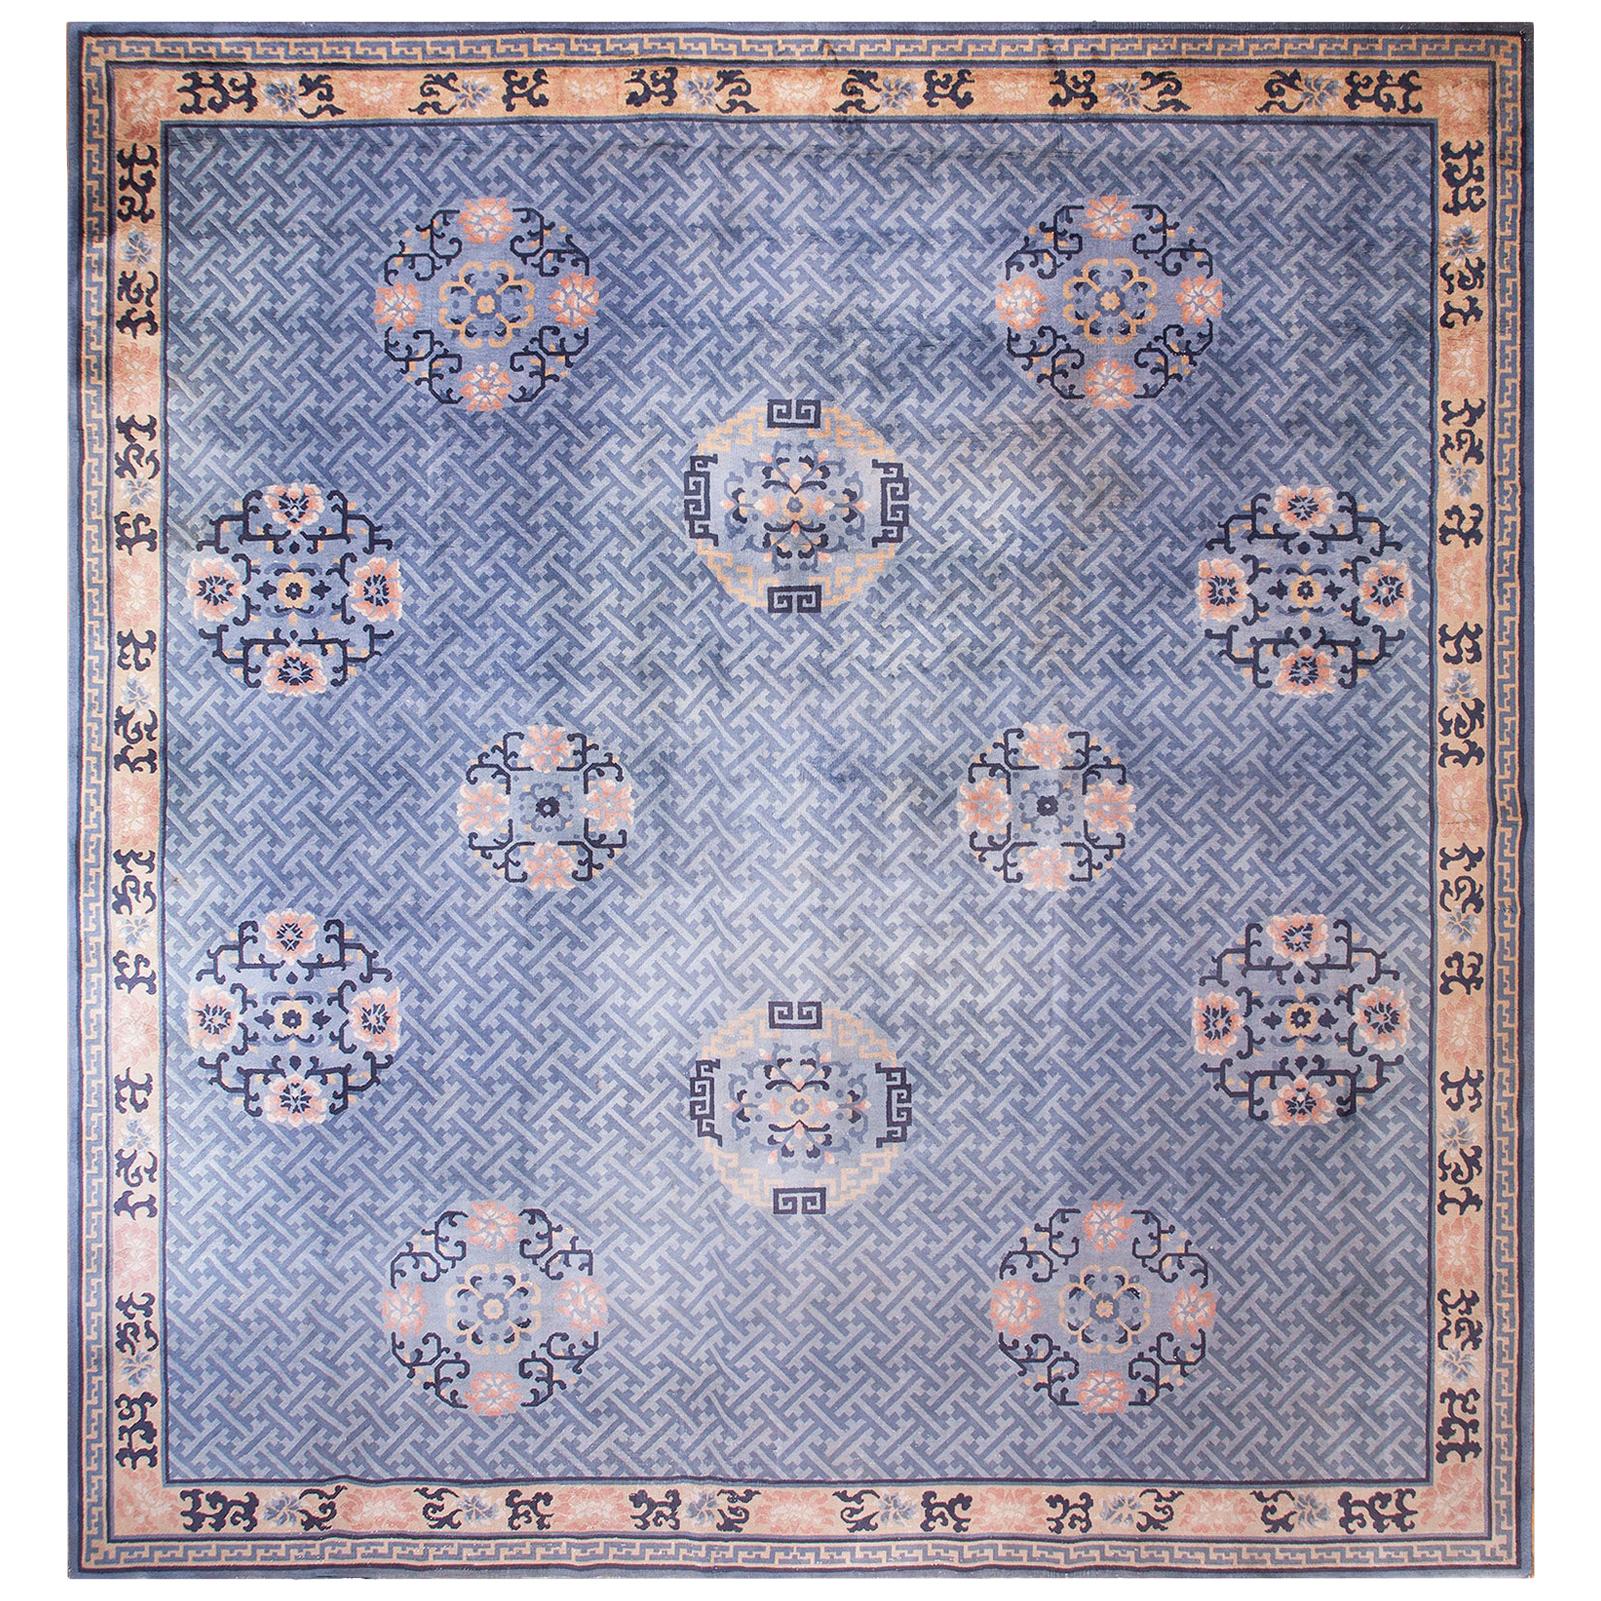 1920s Chinese Art Deco Carpet ( 13'6" x 14'3" - 412 x 435 cm ) For Sale